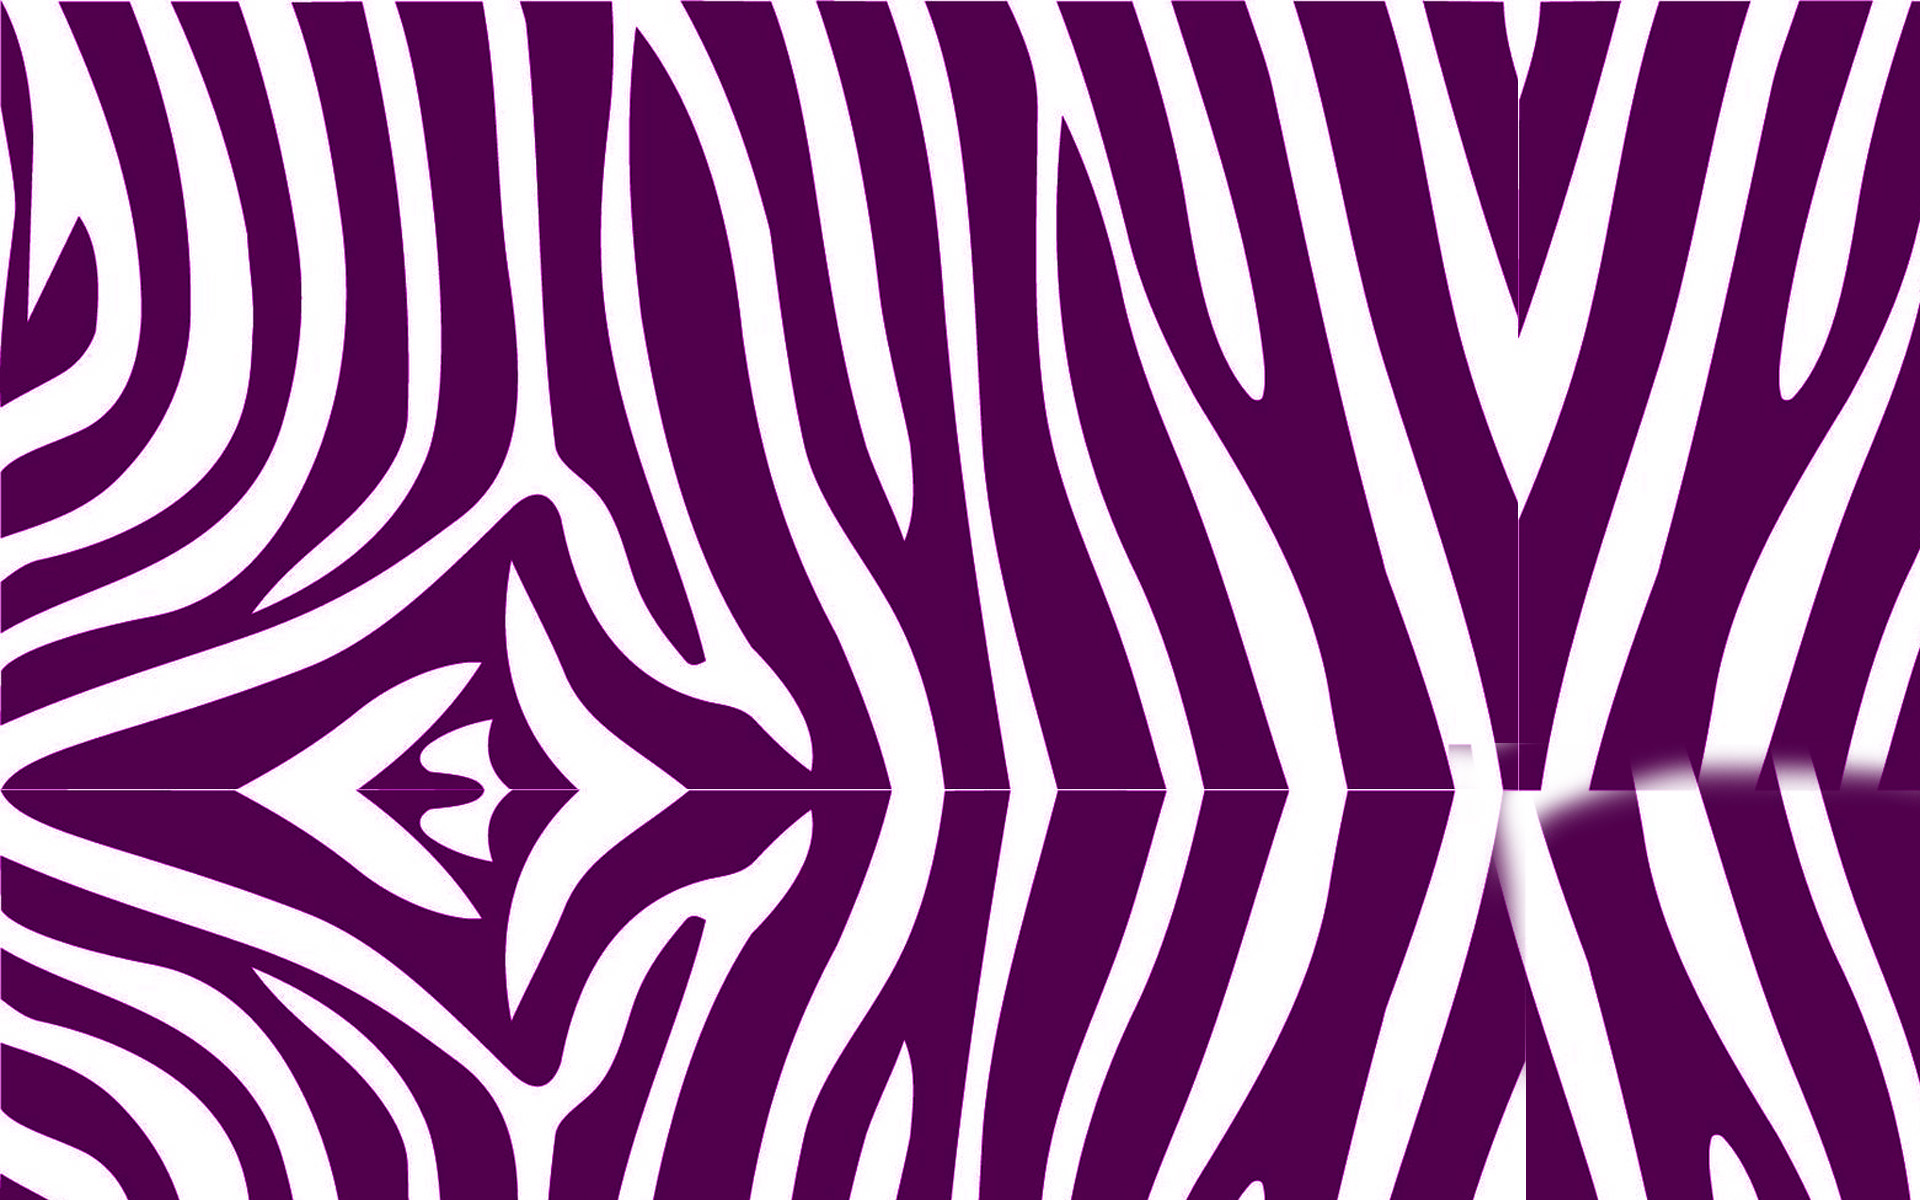 HD Zebra Print Images Download.